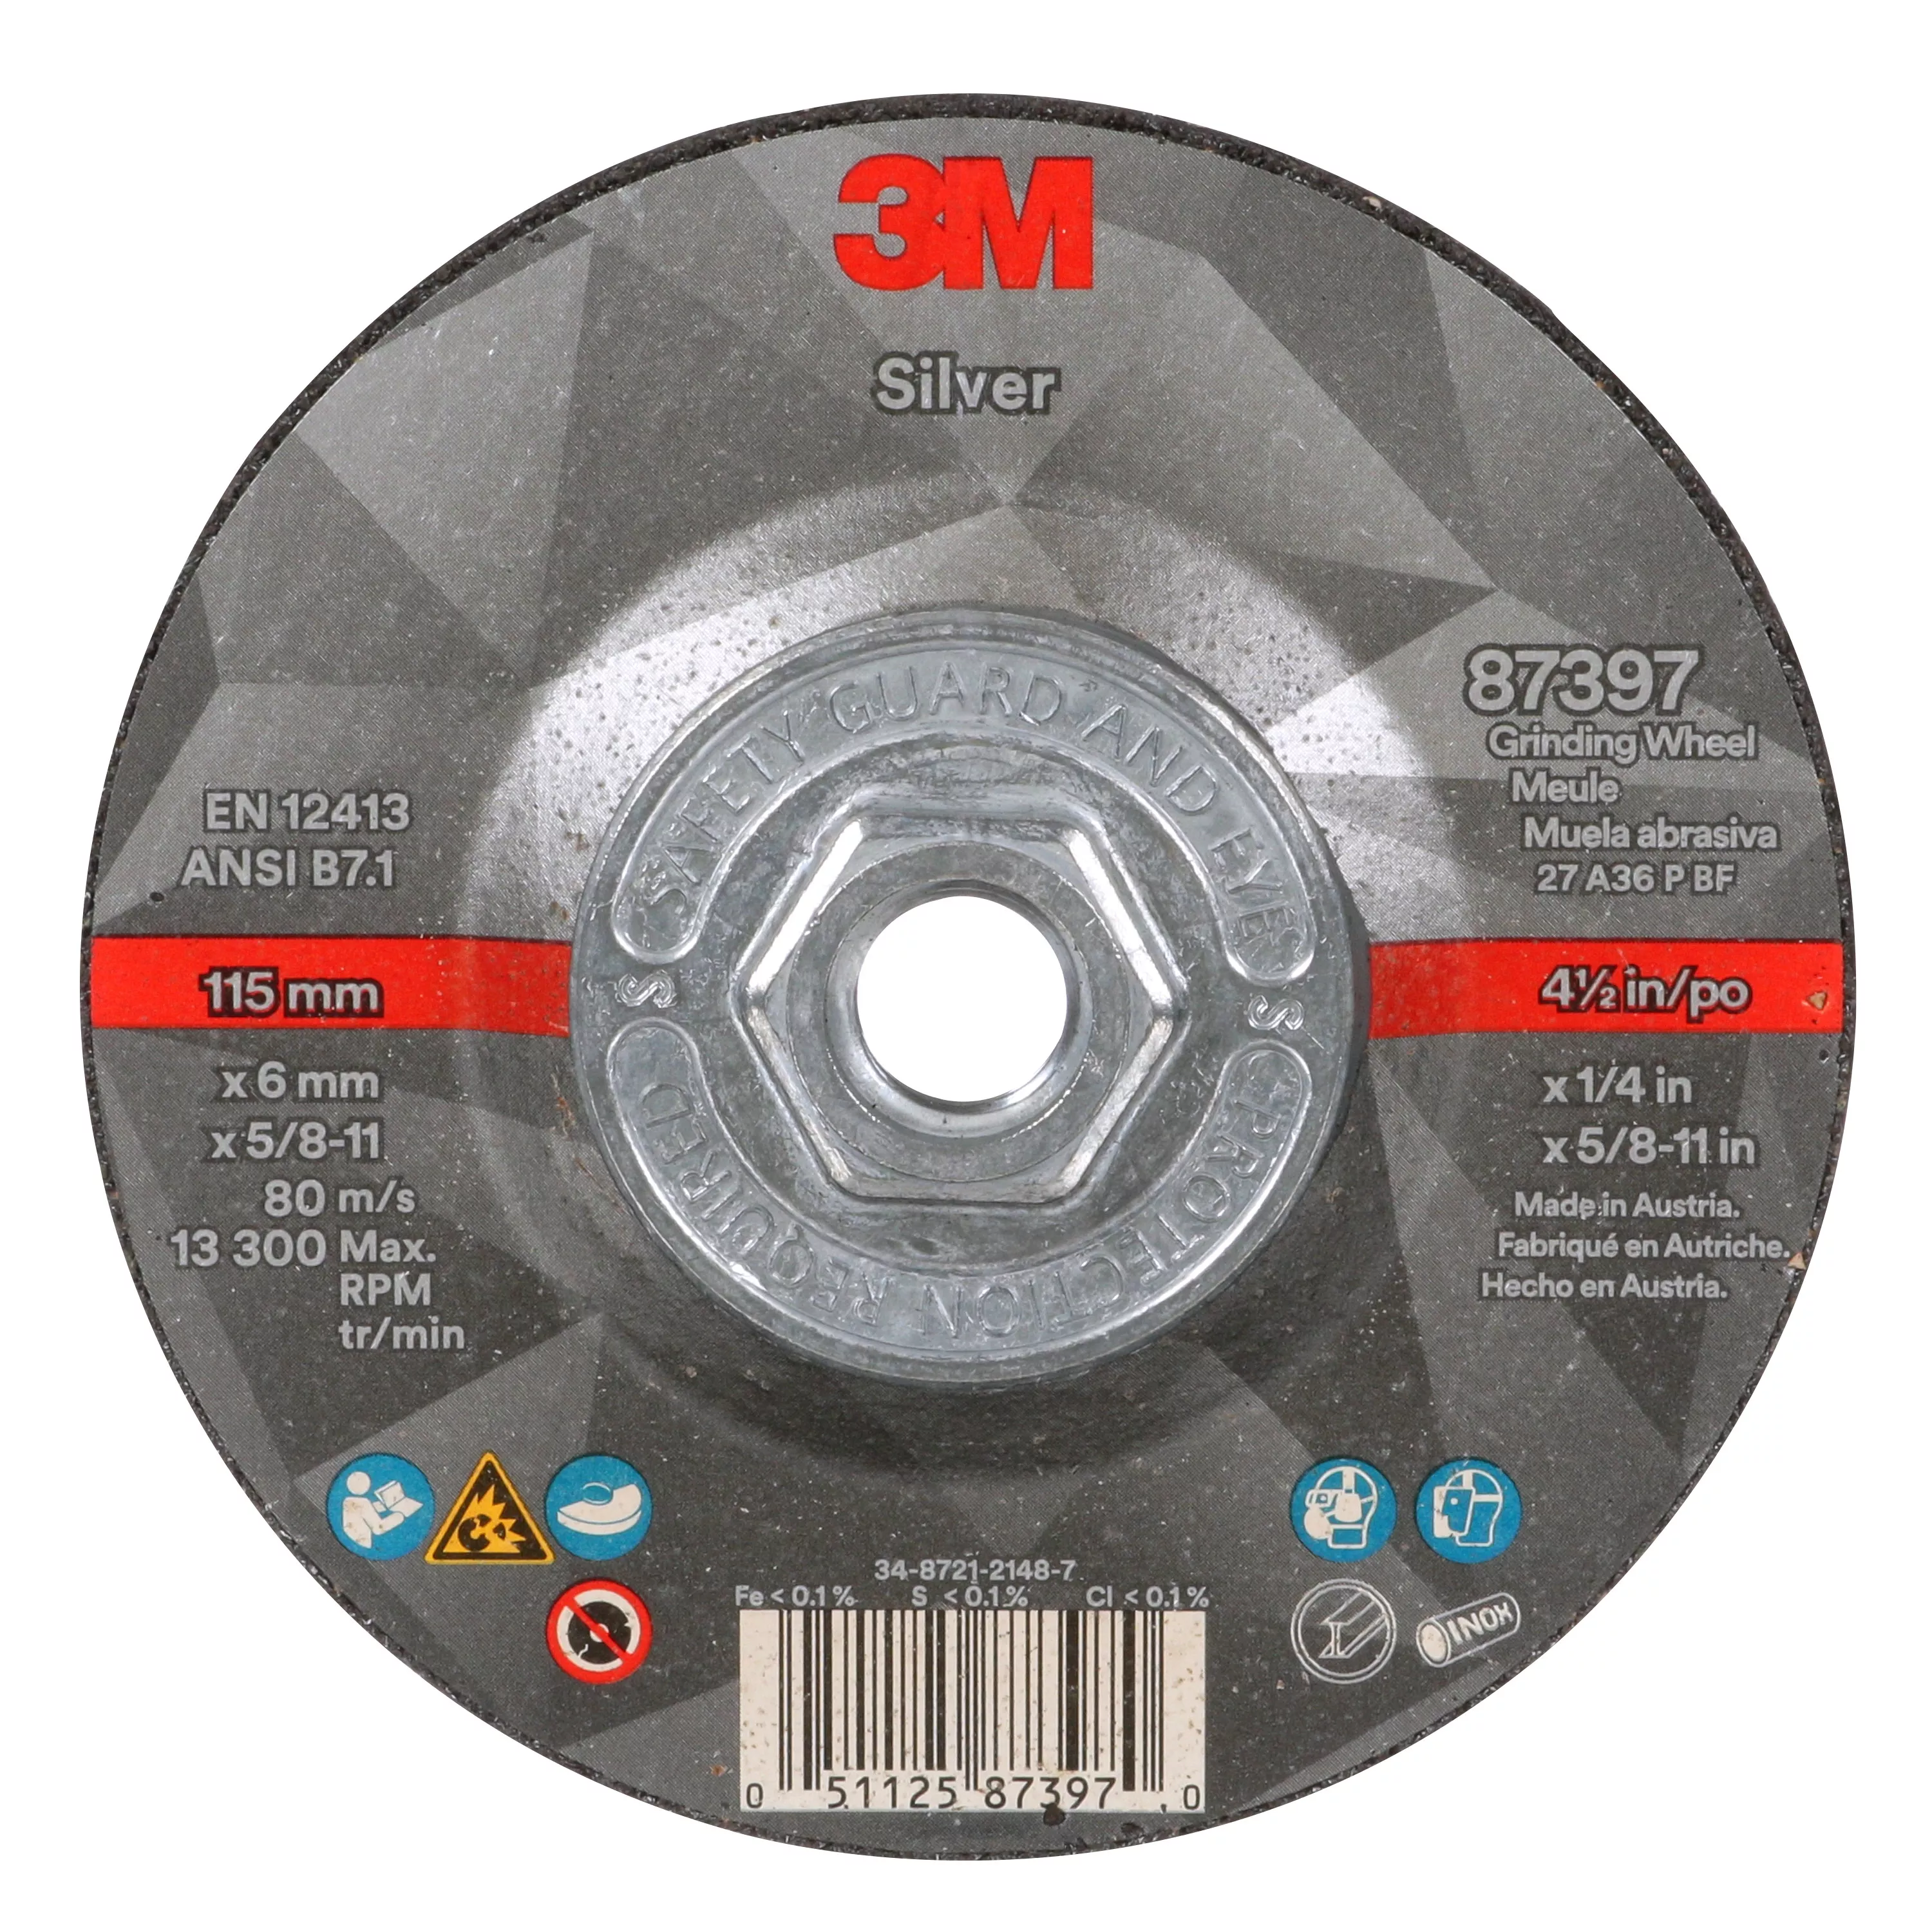 SKU 7100245024 | 3M™ Silver Depressed Center Grinding Wheel